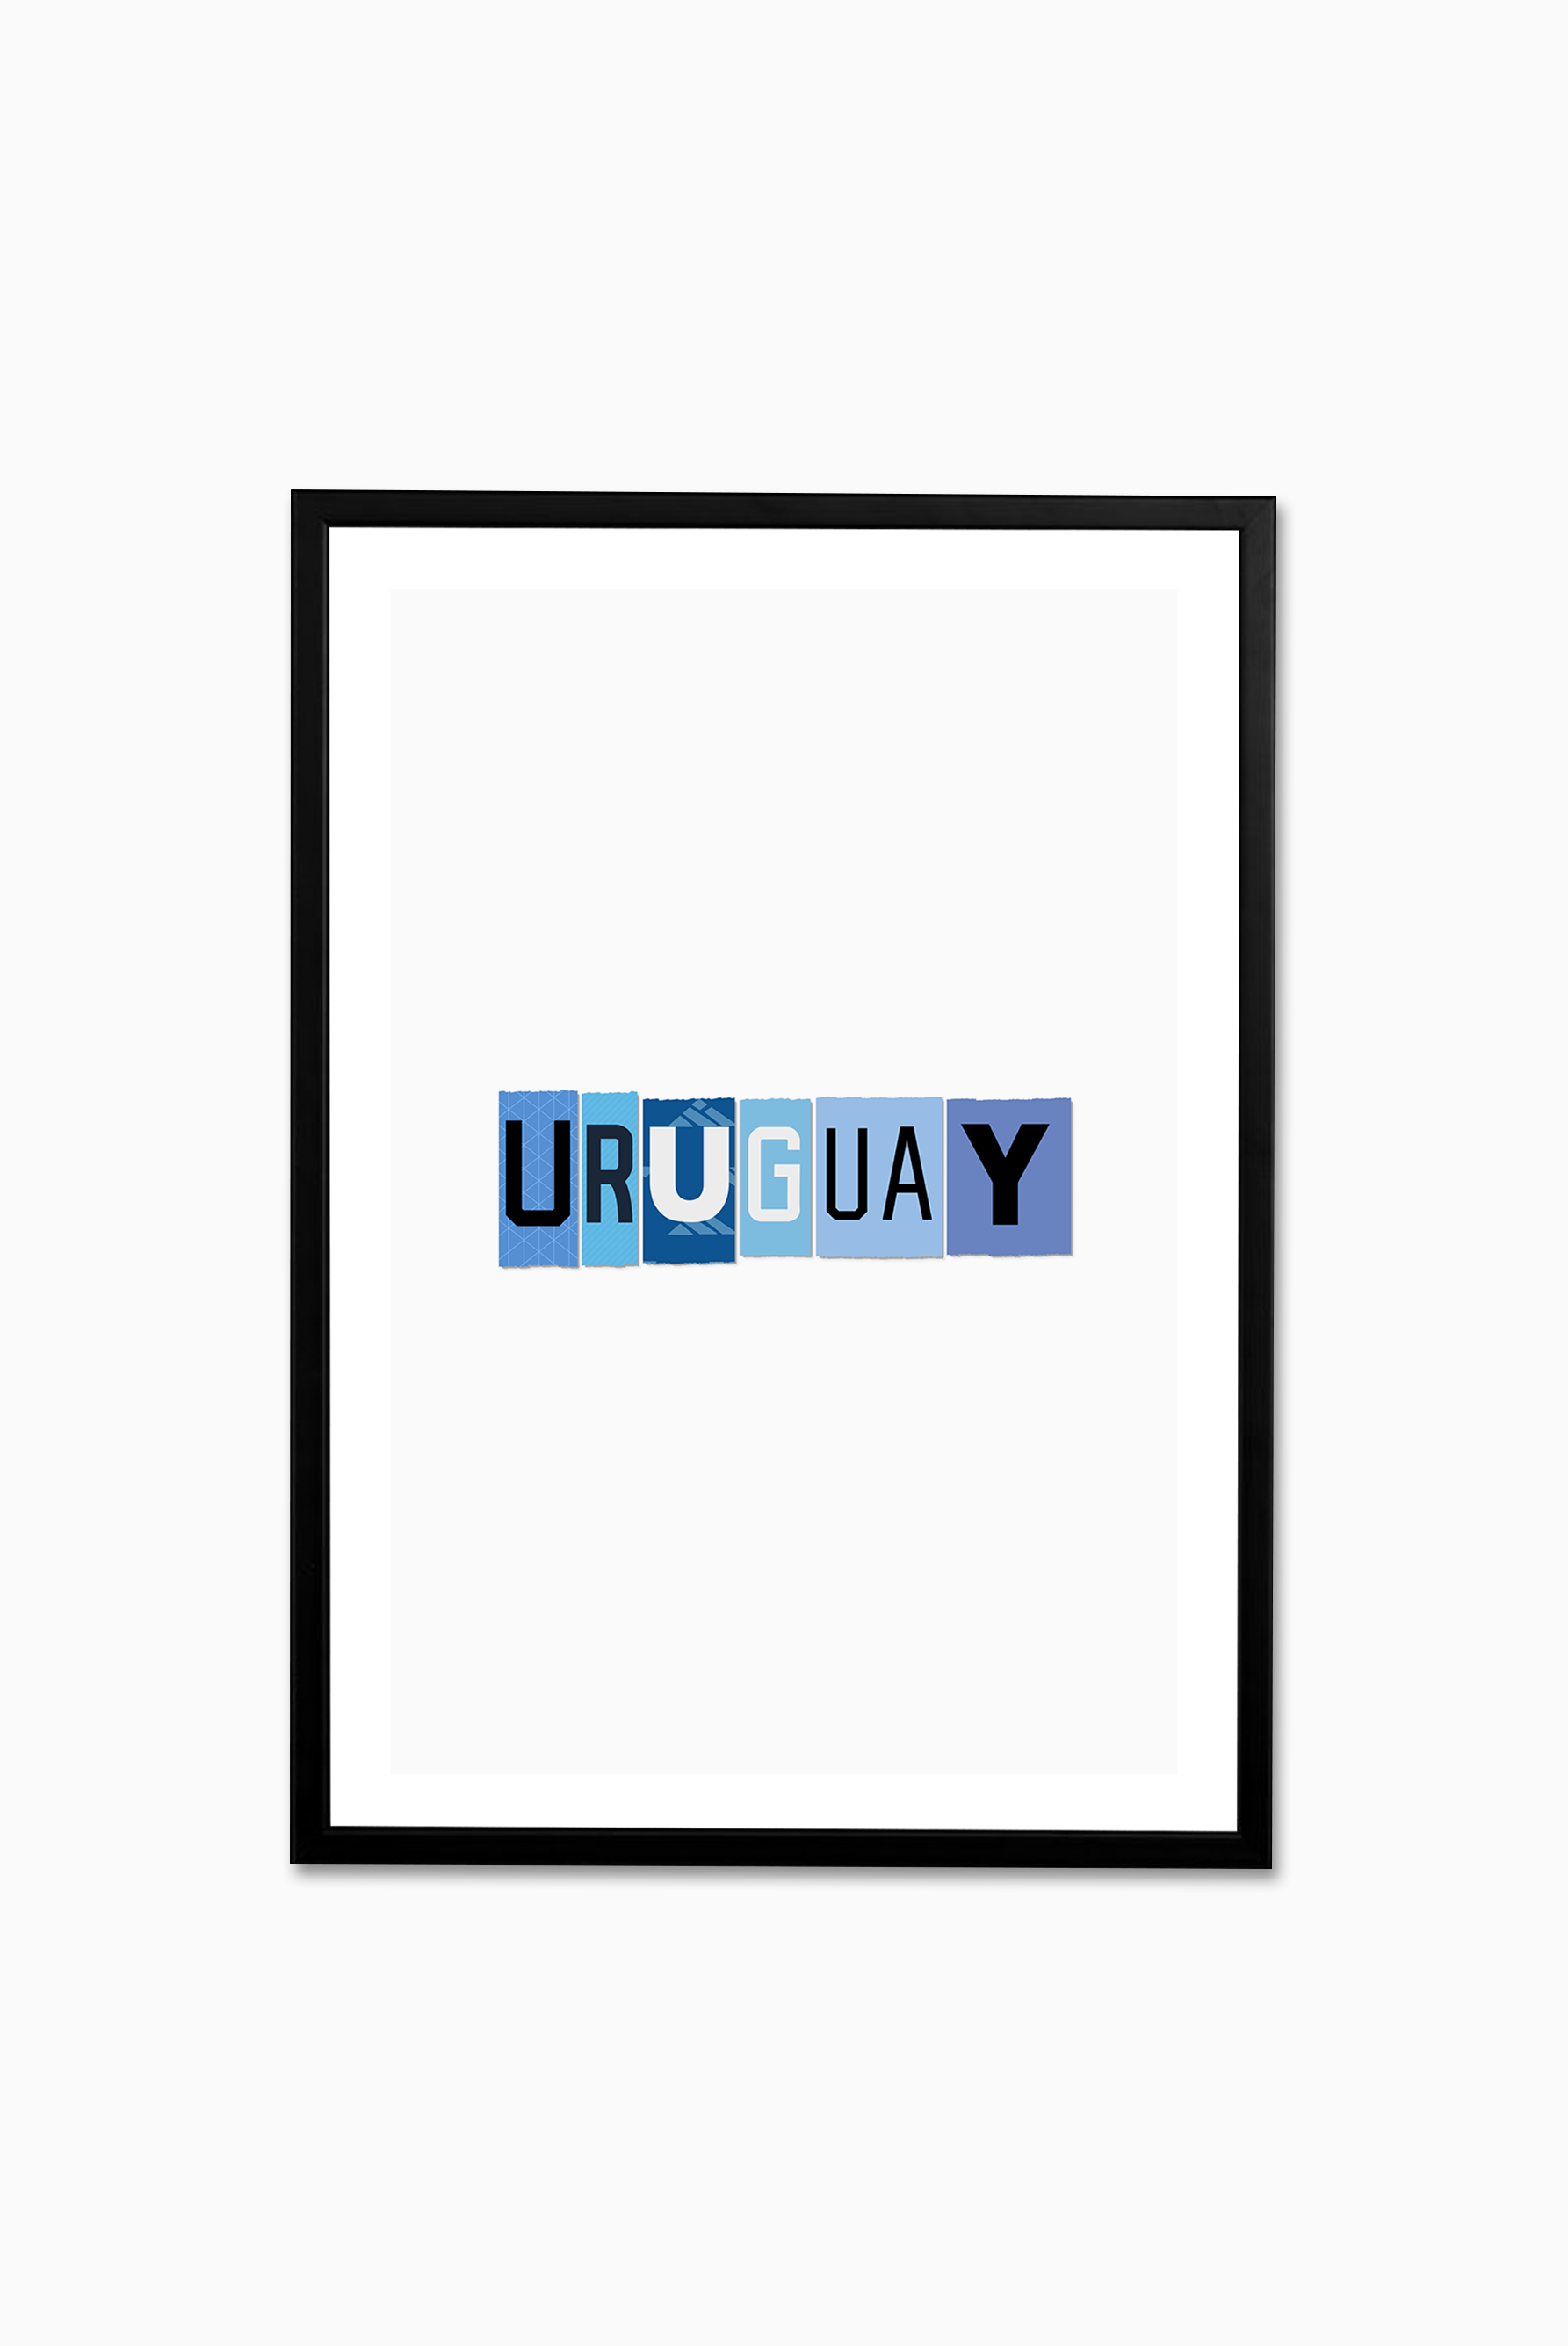 Uruguay Wear and Tear / Print